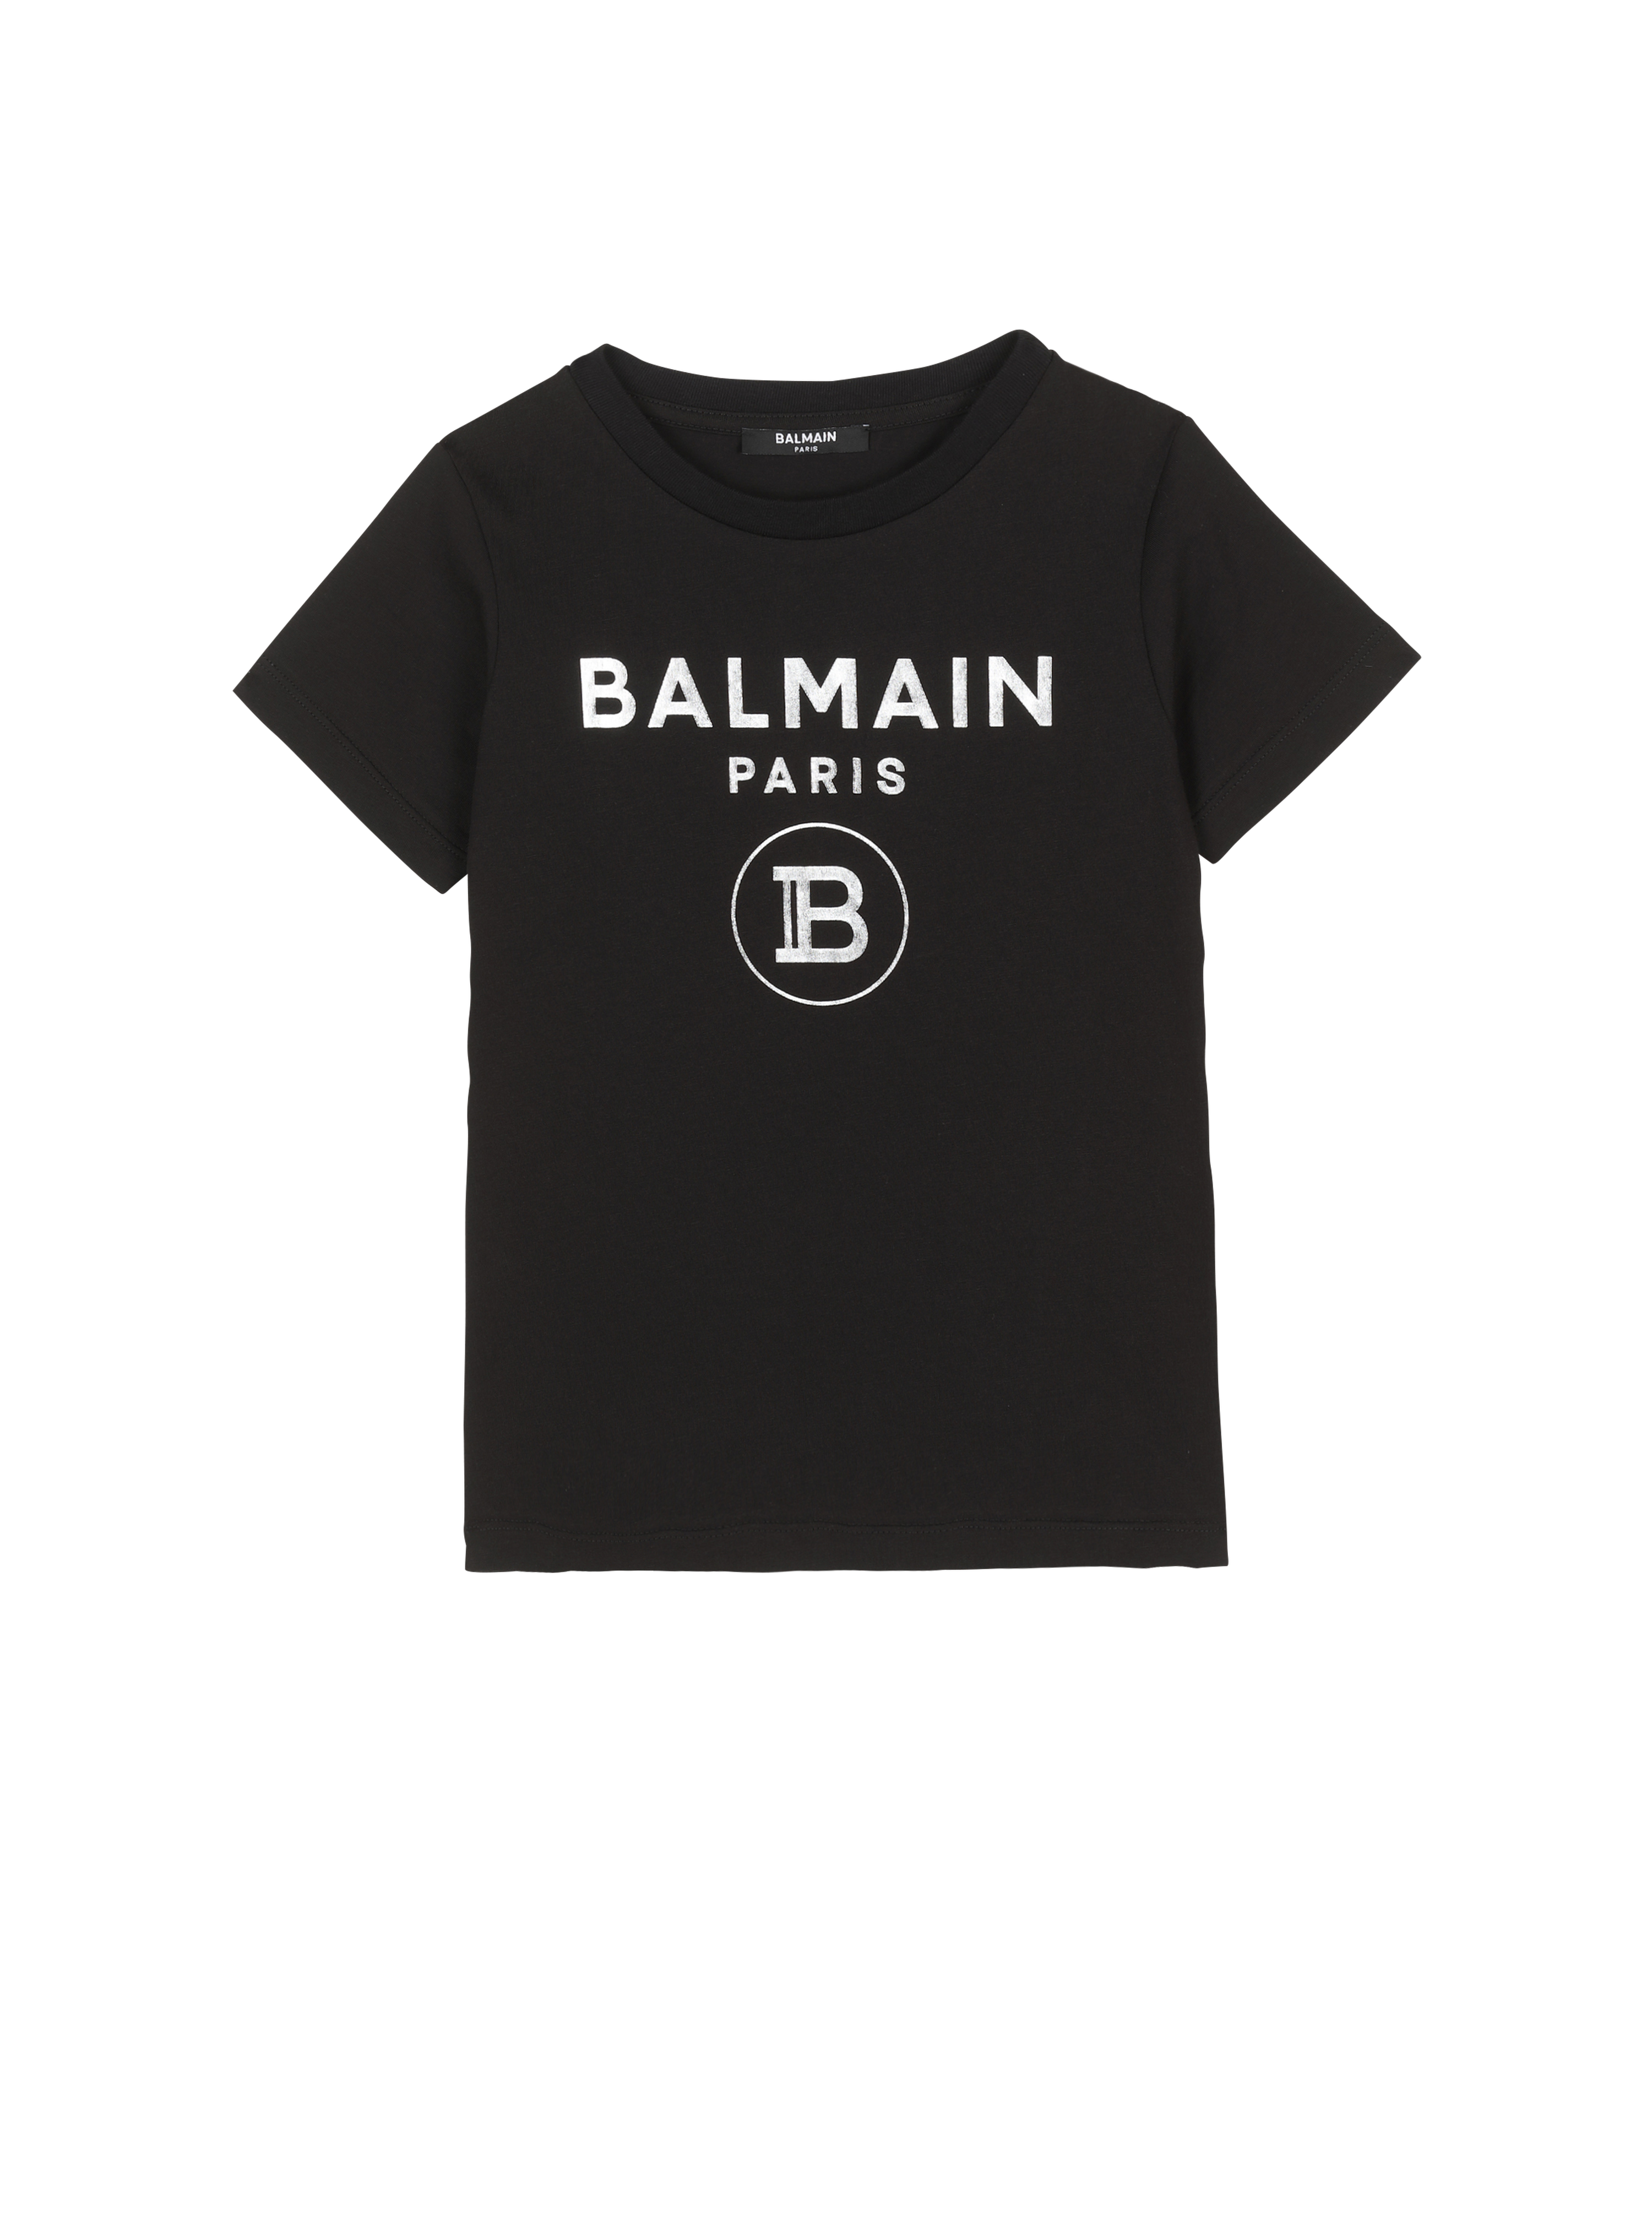 Cotton T-shirt with Balmain logo, black